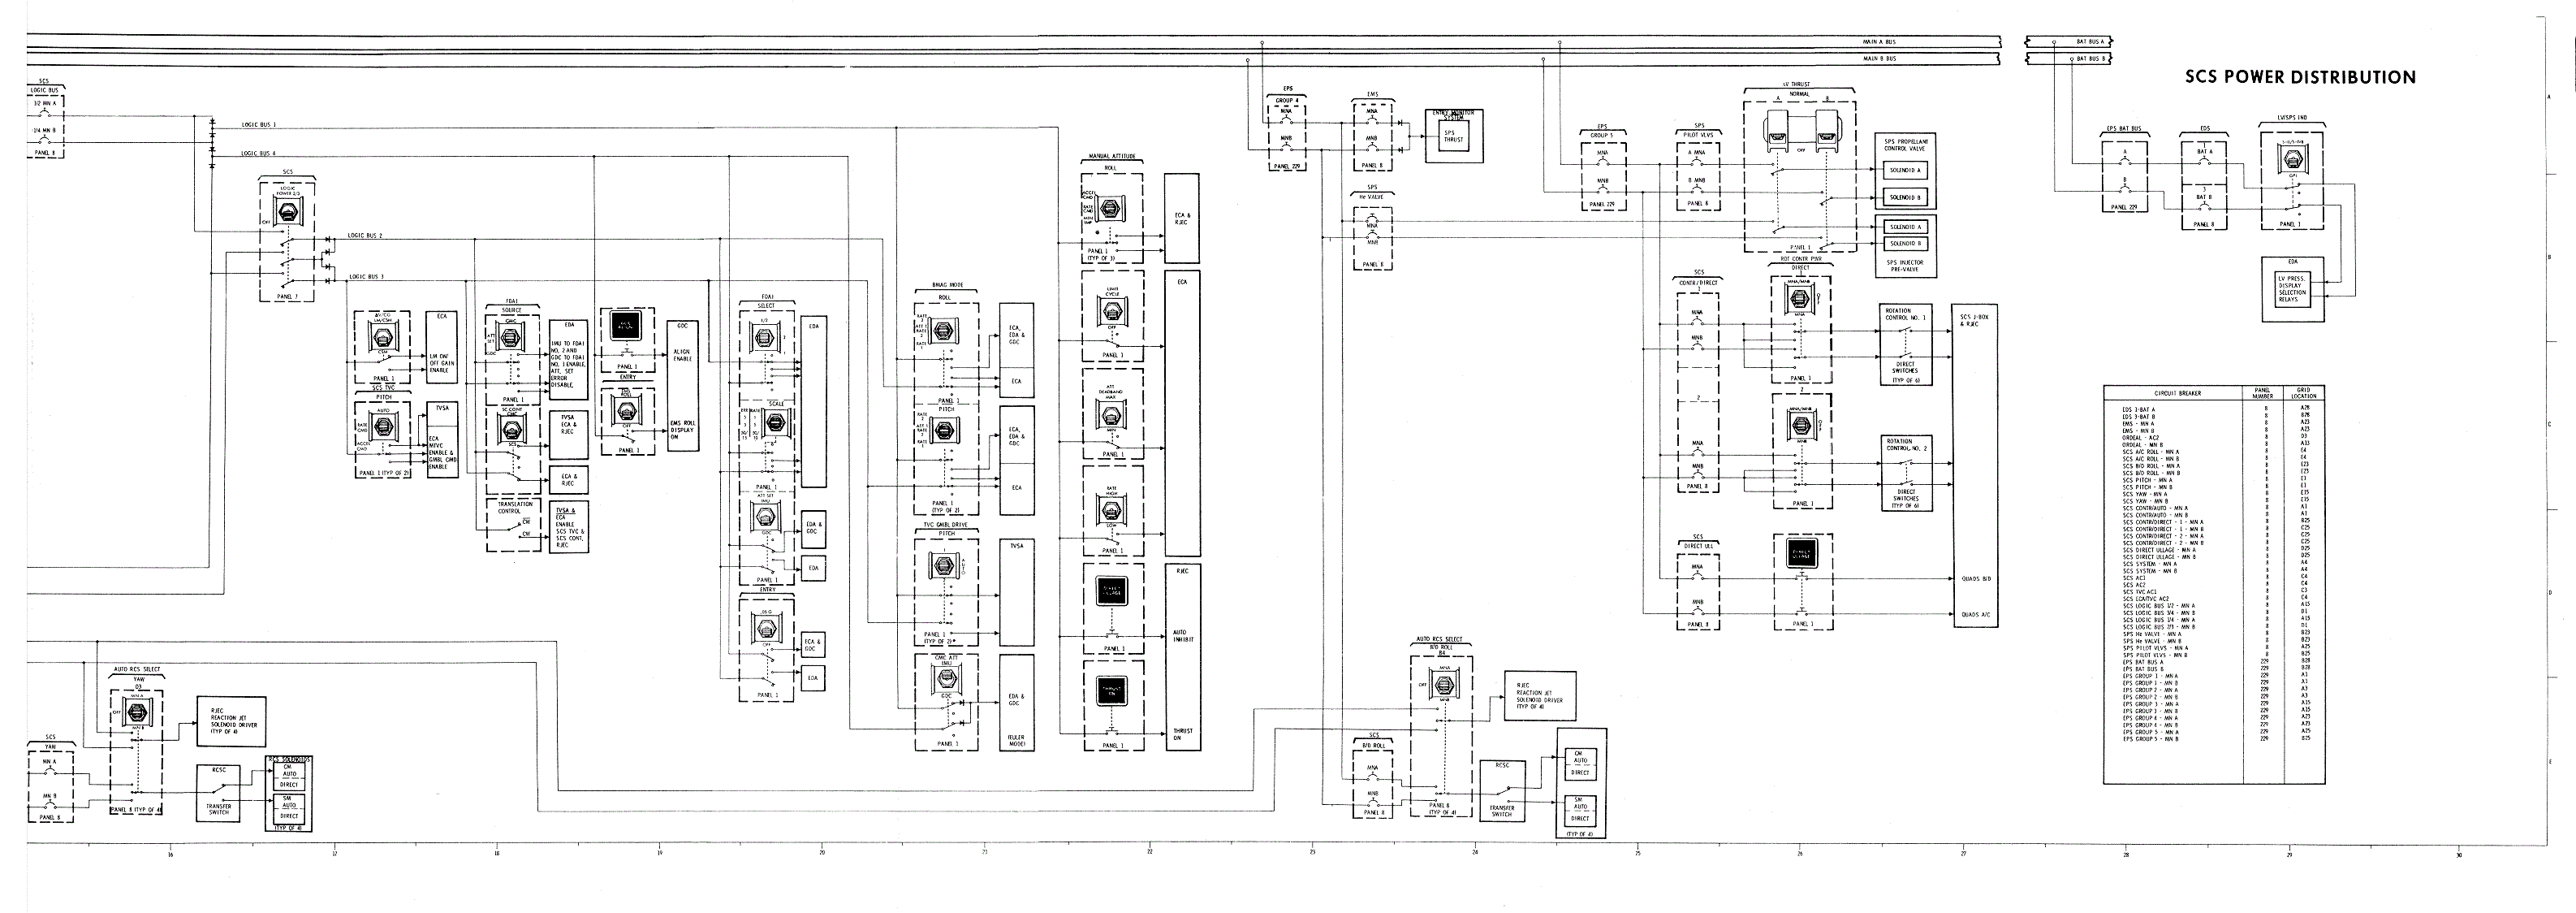 CS D-C Power Distribution Schematic2